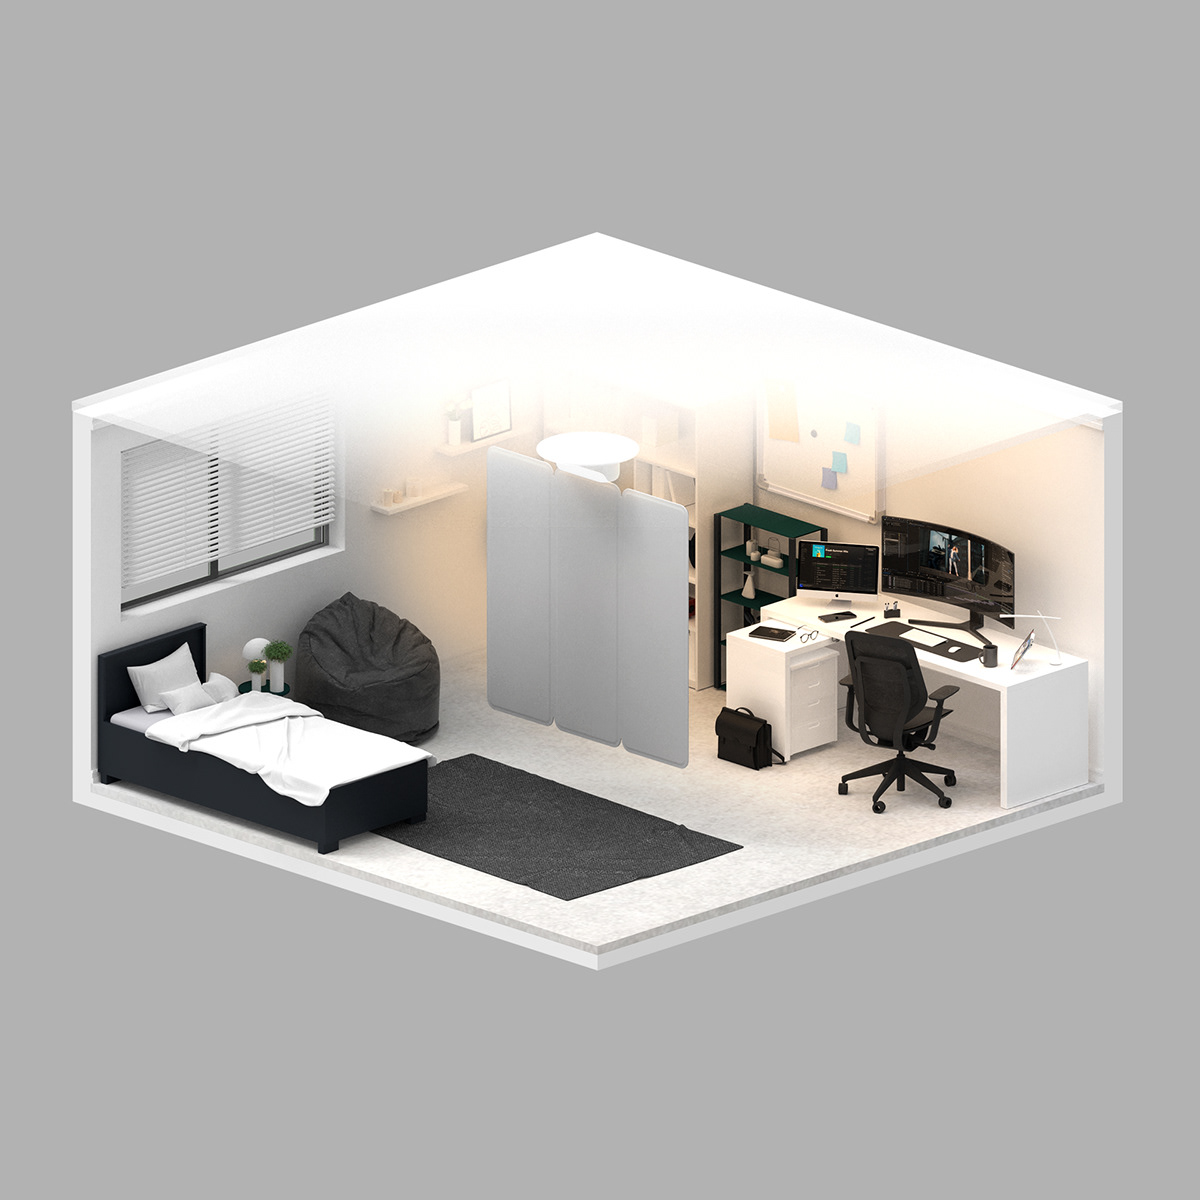 future industrial design  interior design  light partition product Space  speculative design home house